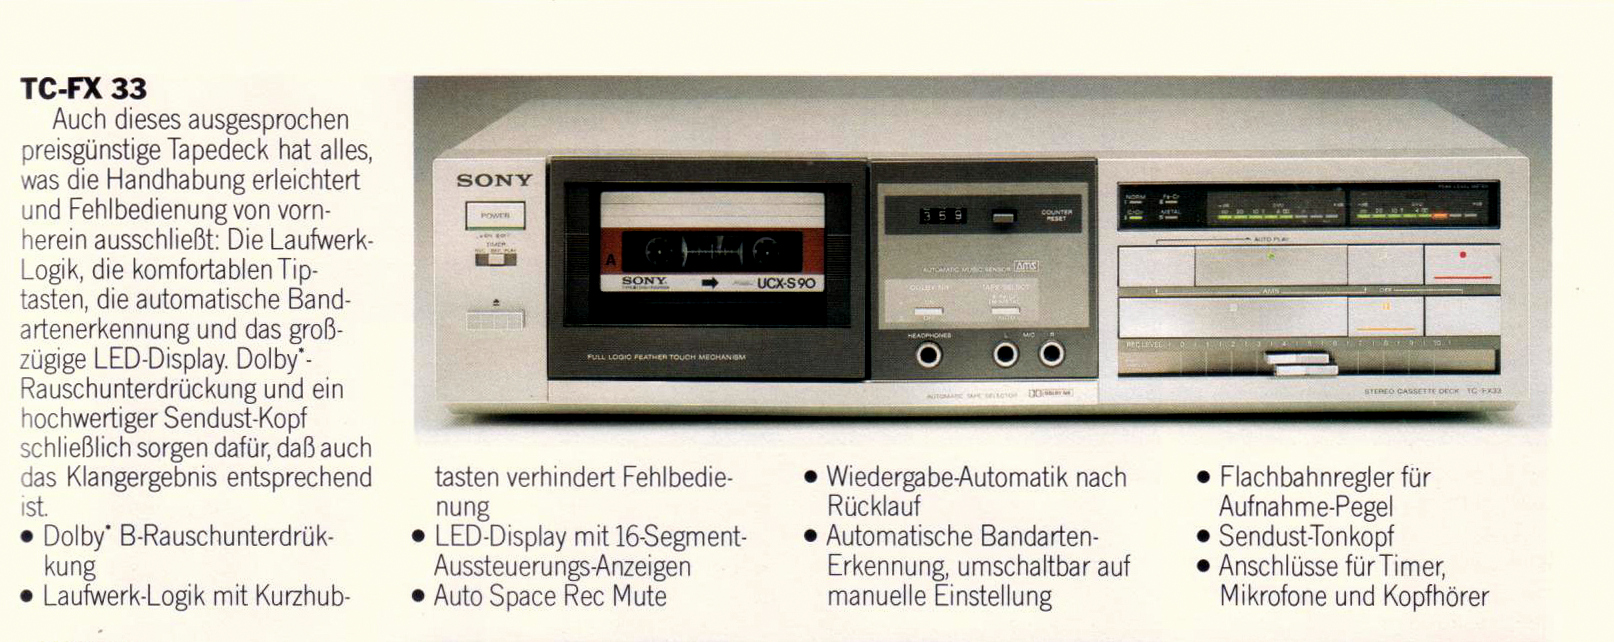 Sony TC-FX 33-Prospekt-1982.jpg